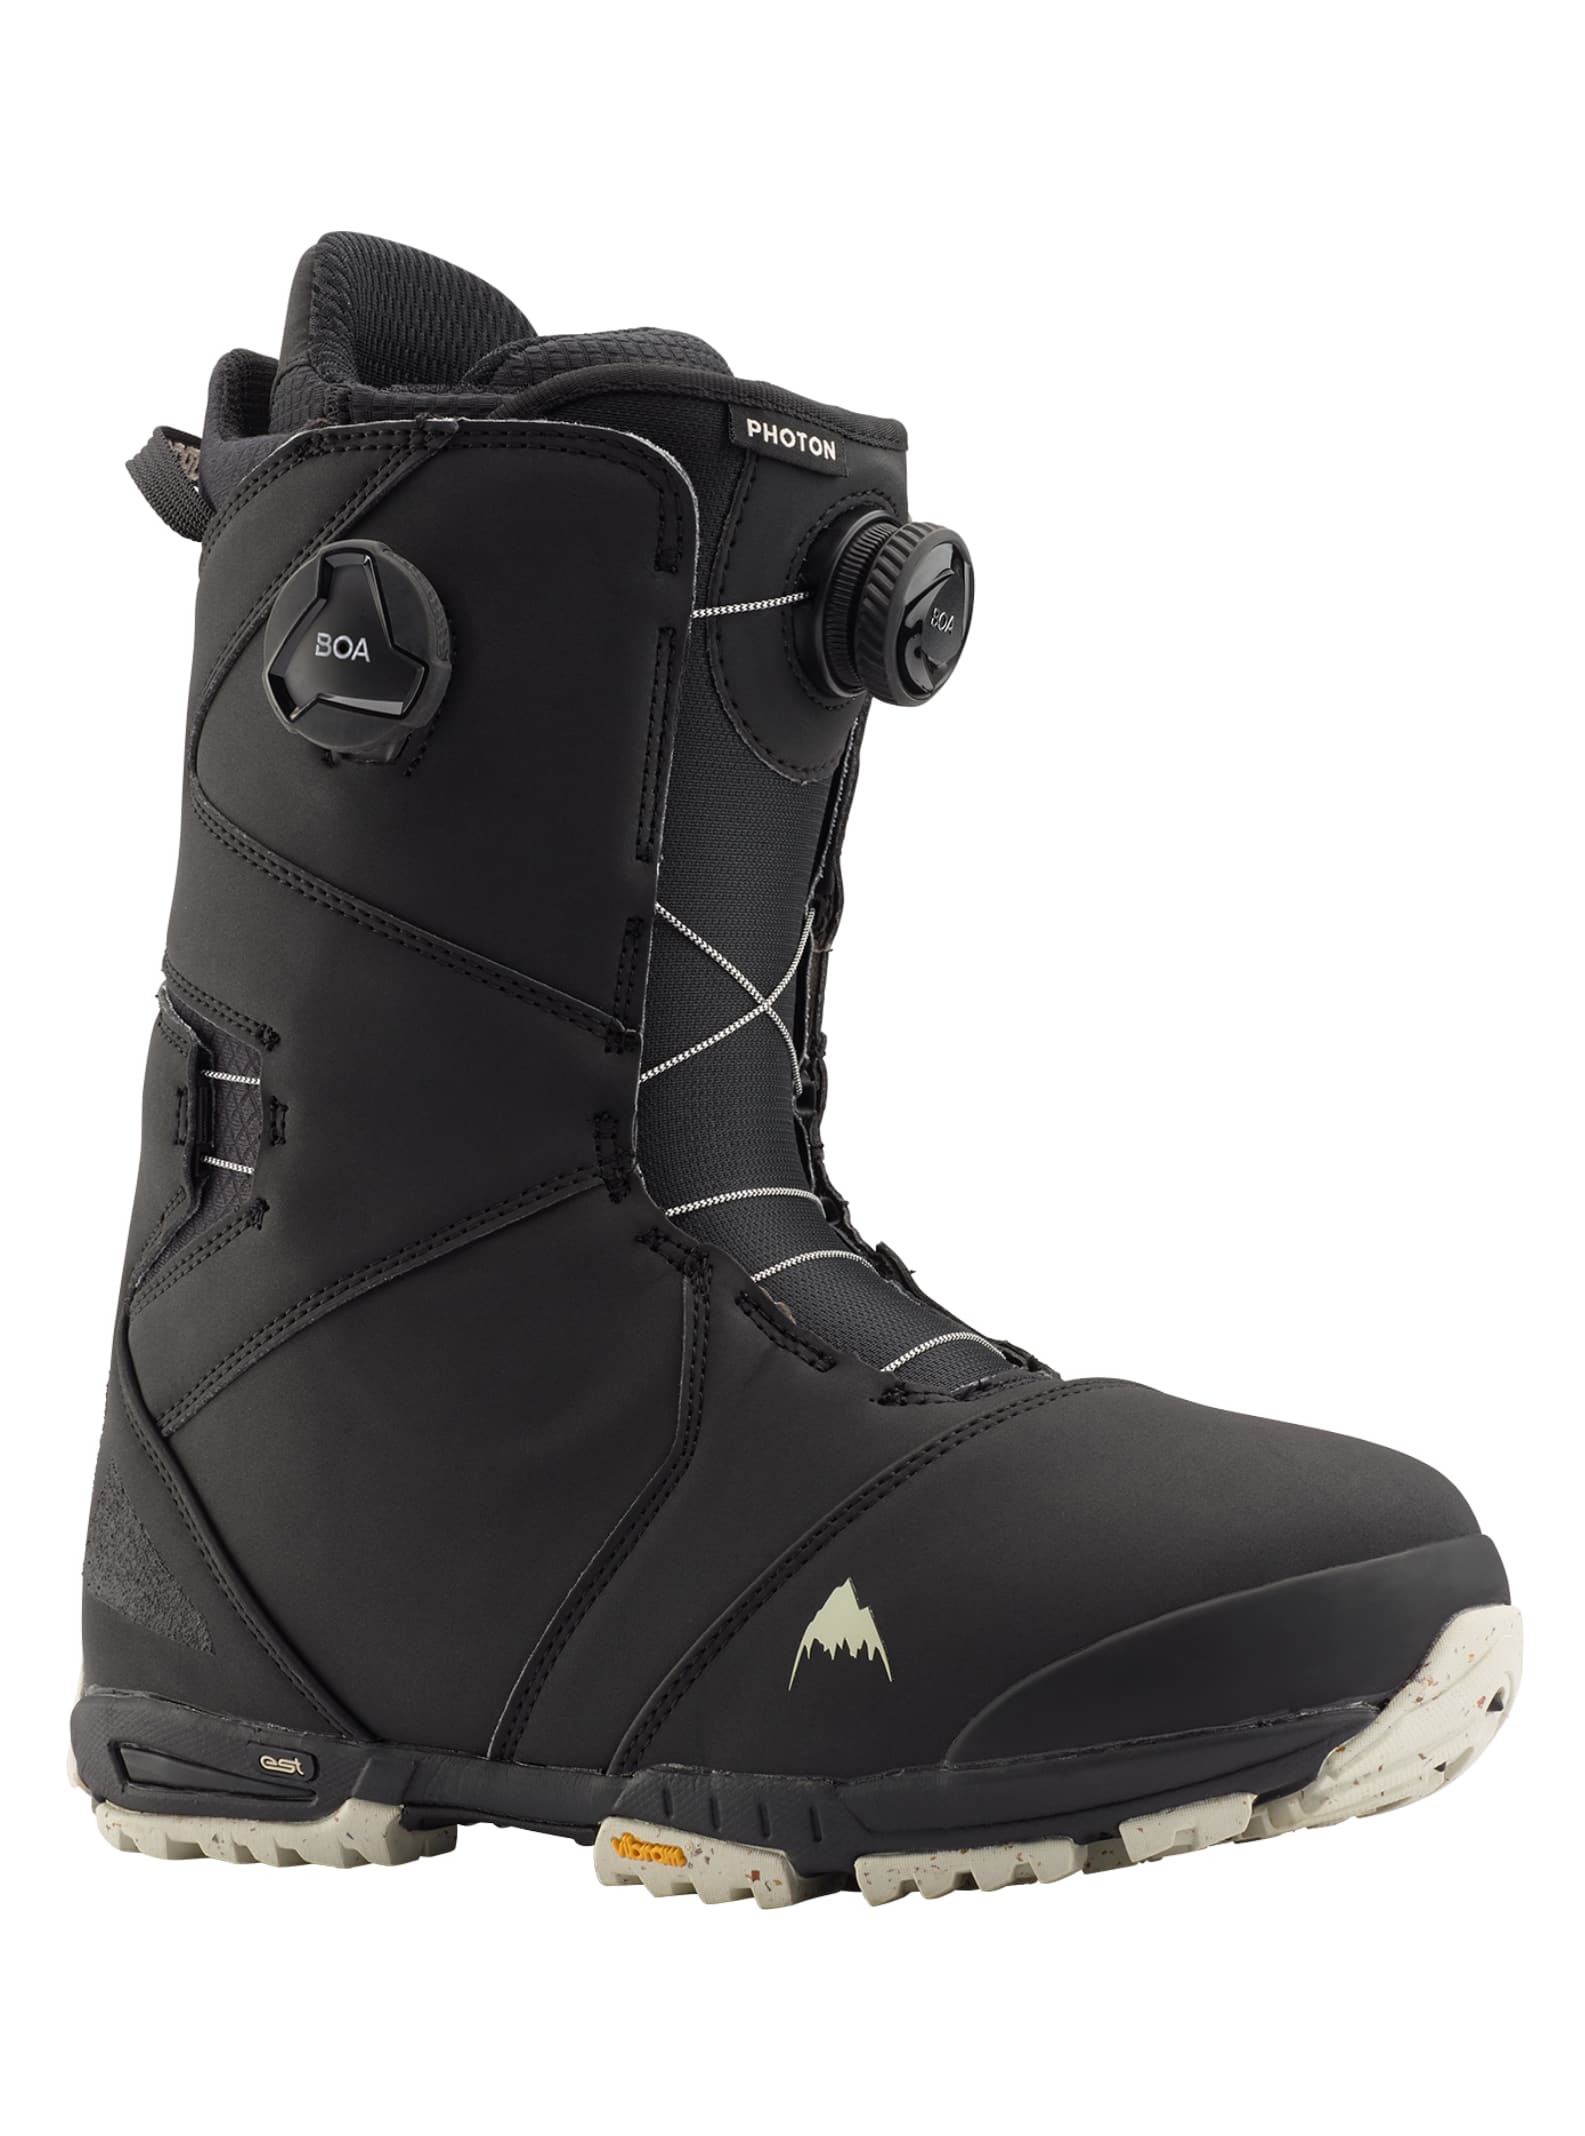 Burton - Boots de snowboard Photon Boa® homme Wide, Black, 12